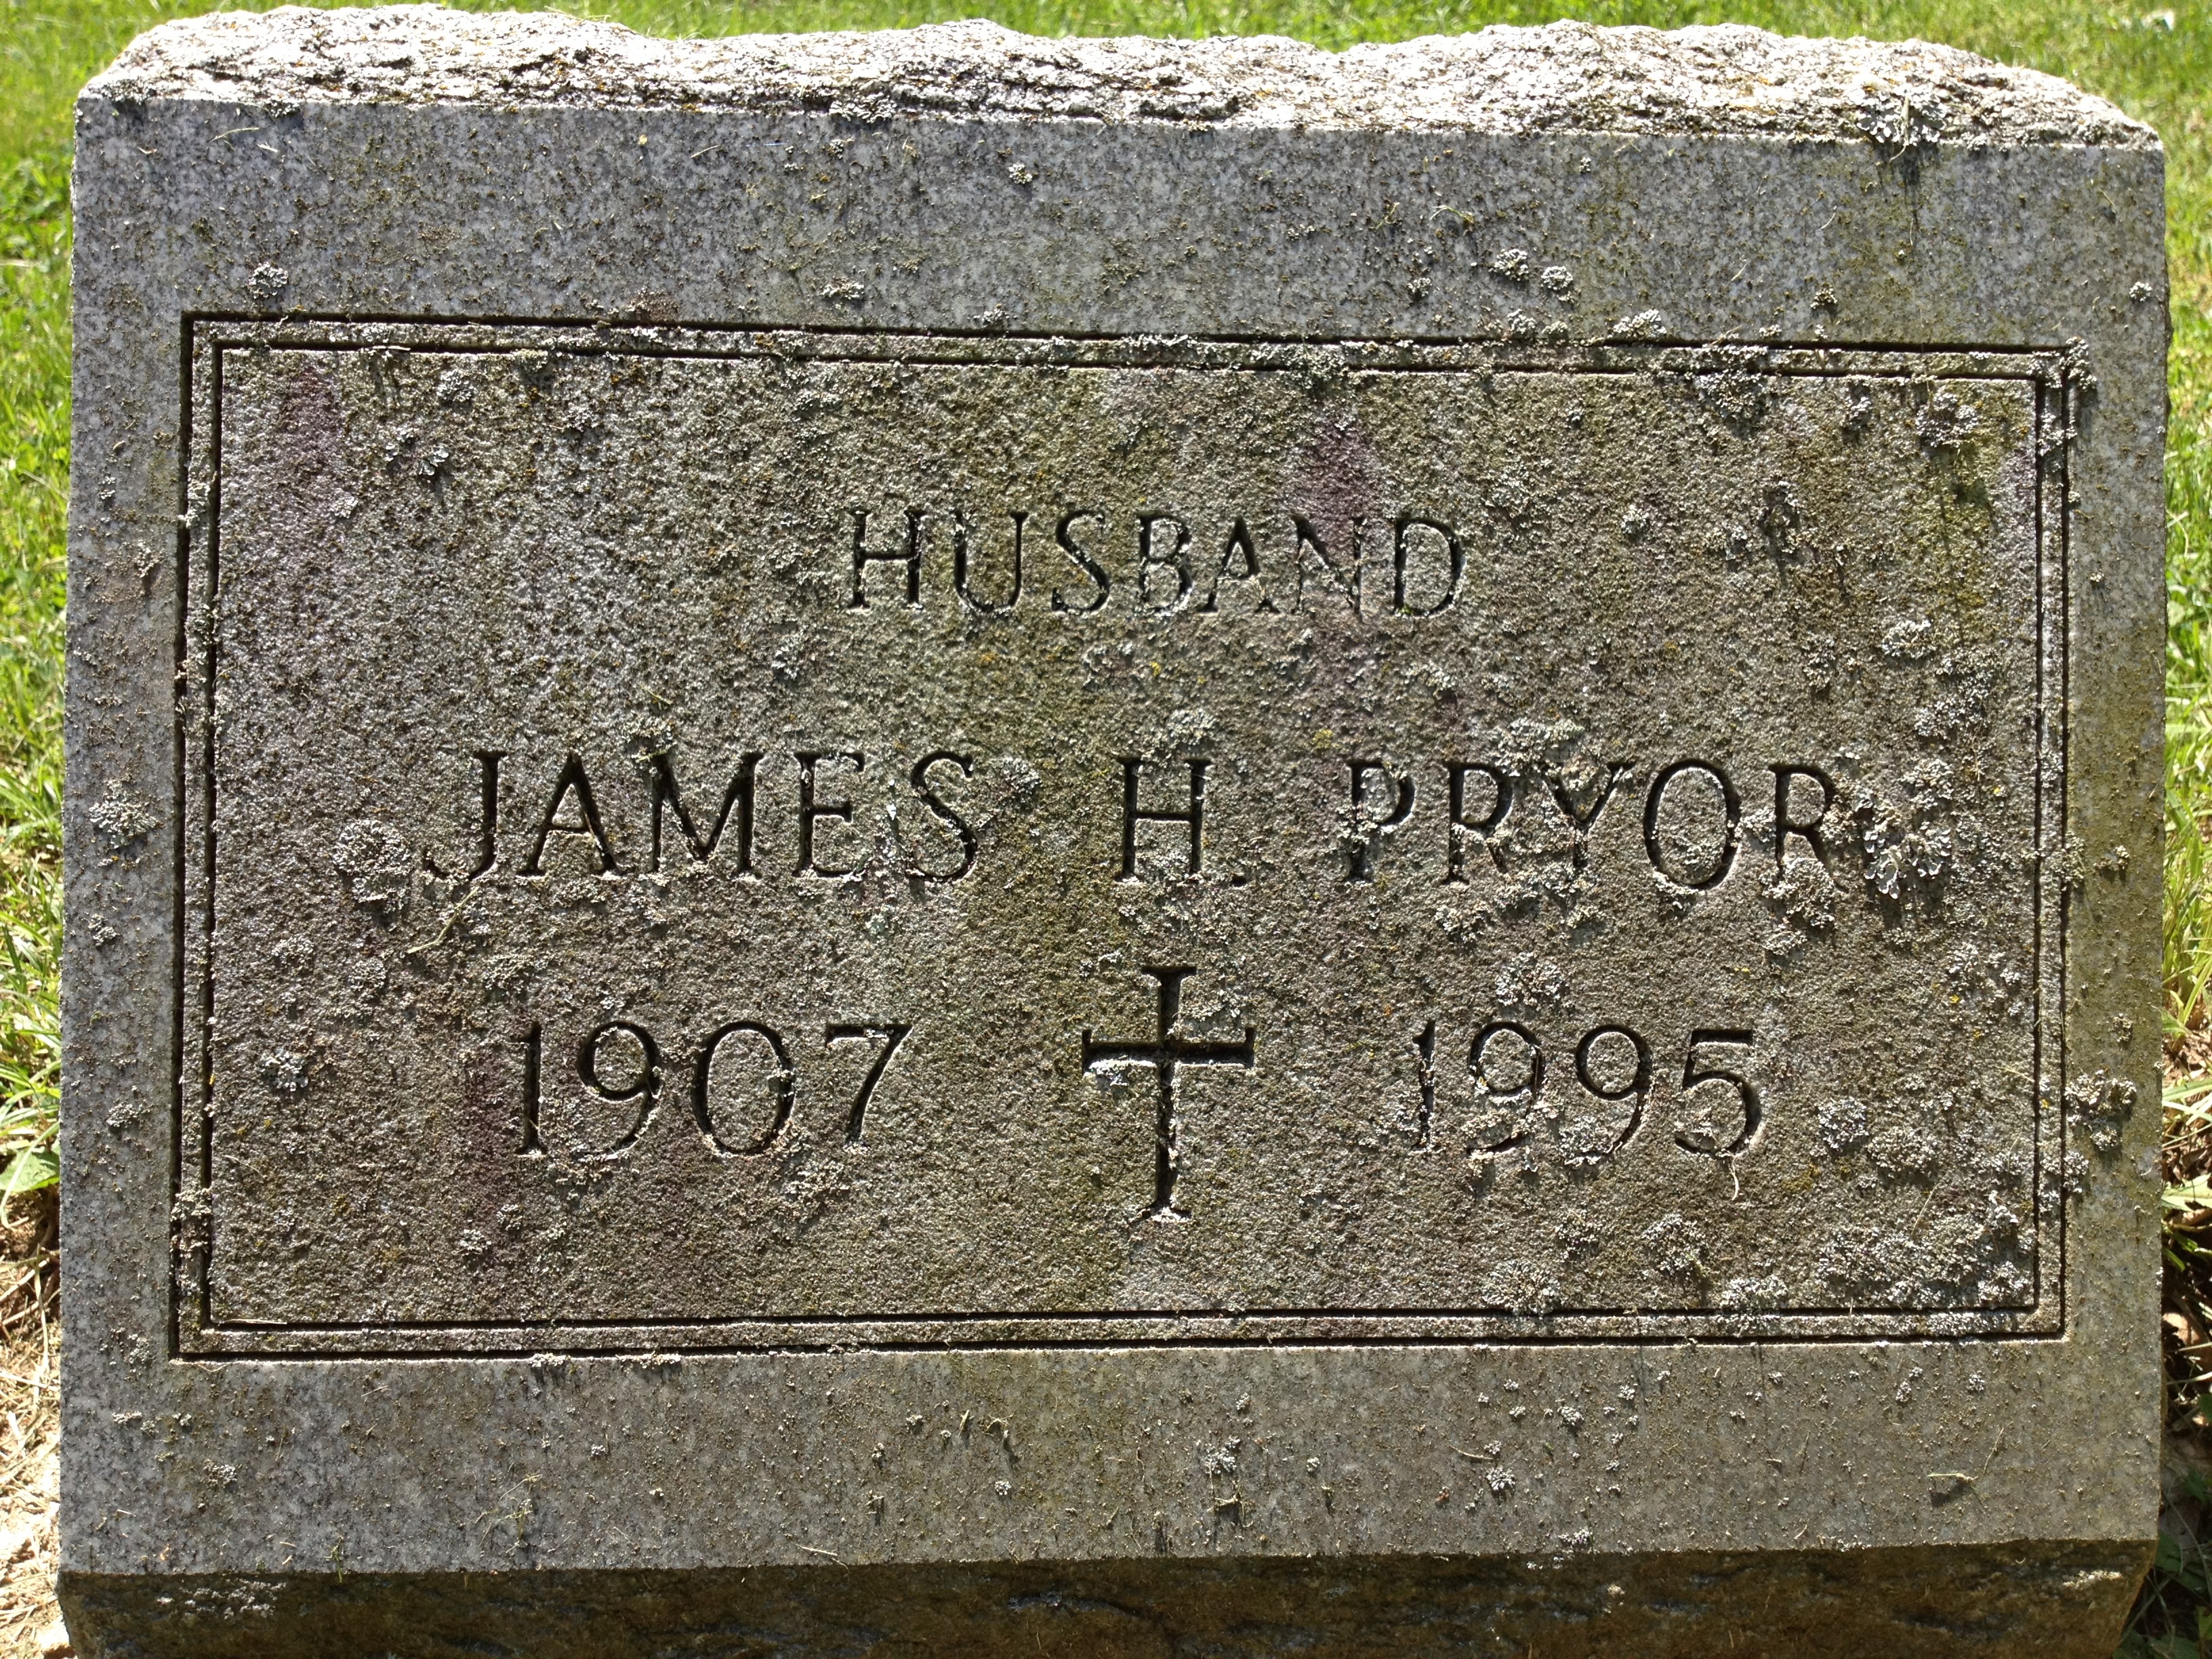 Headstone of James Houston Pryor